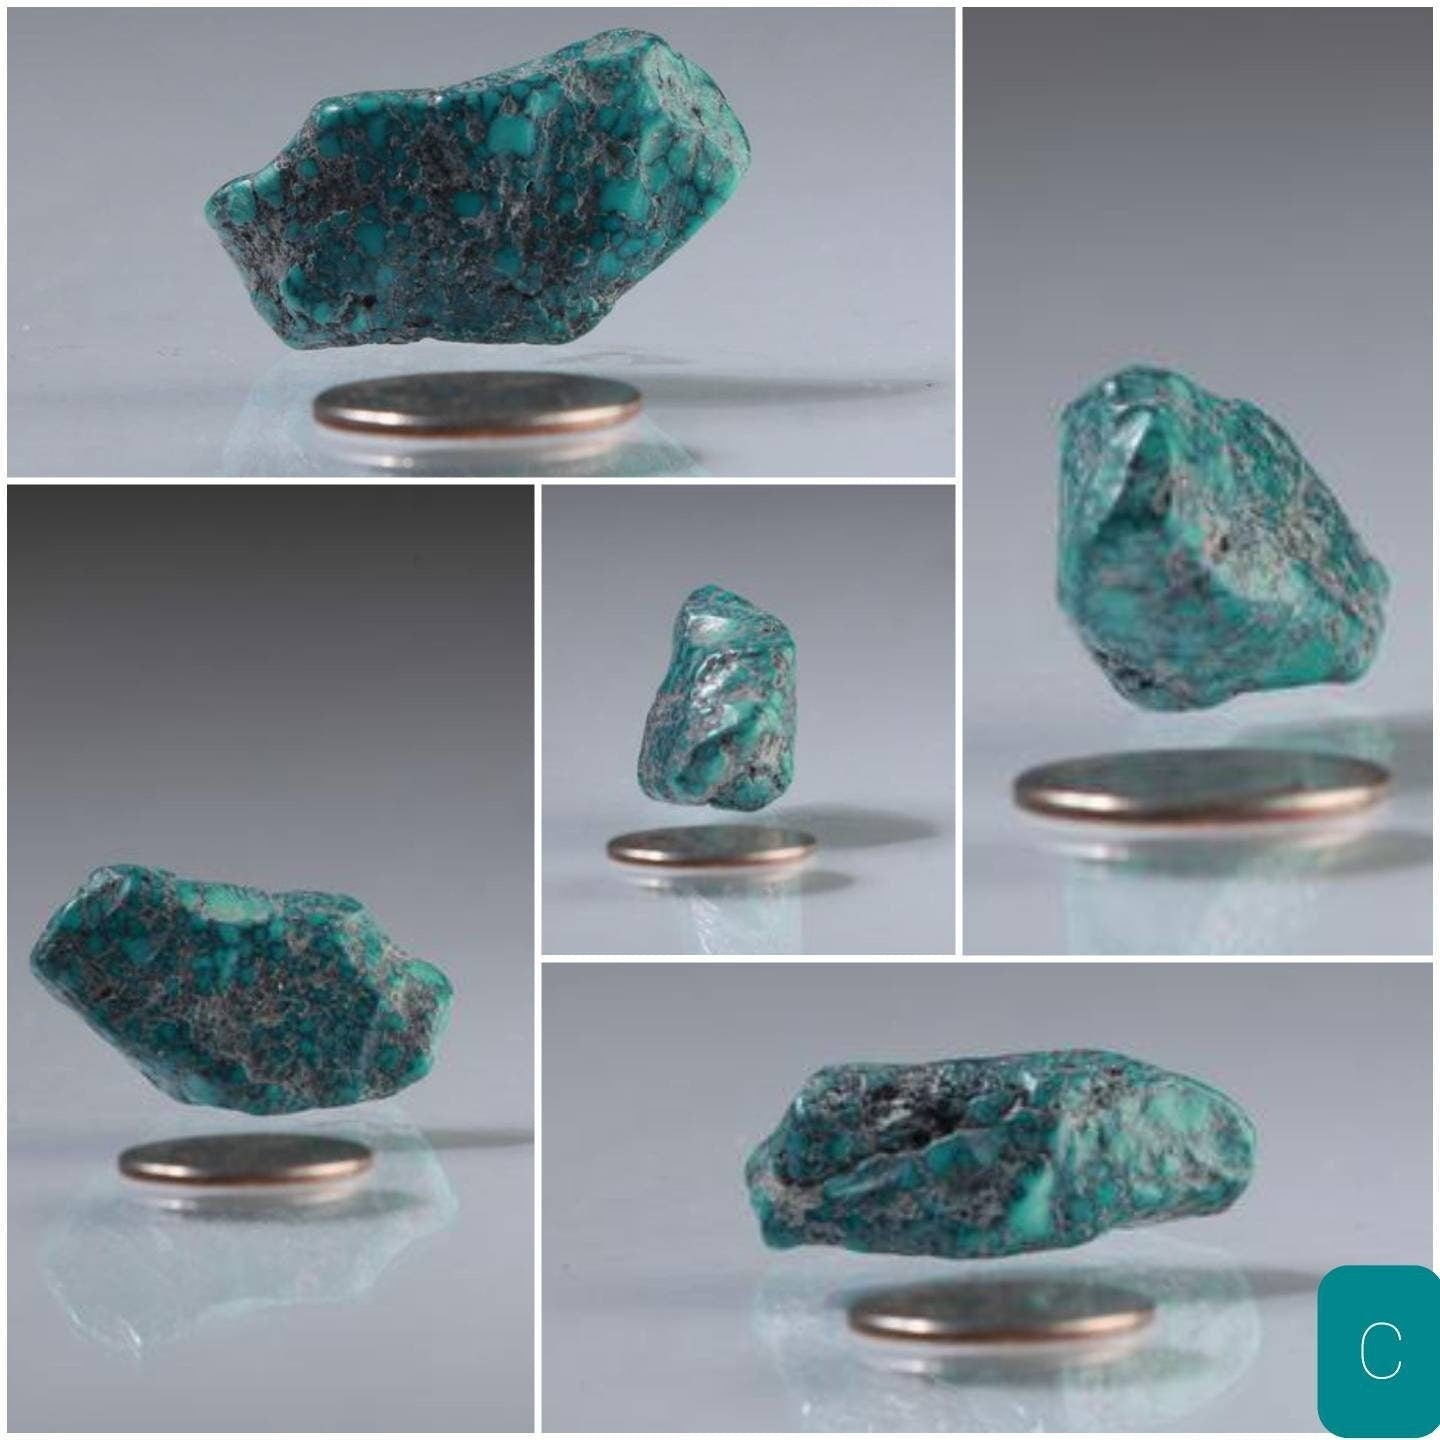 Natural Tibetan Turquoise Rough Uncut Rock Mineral Gemstone